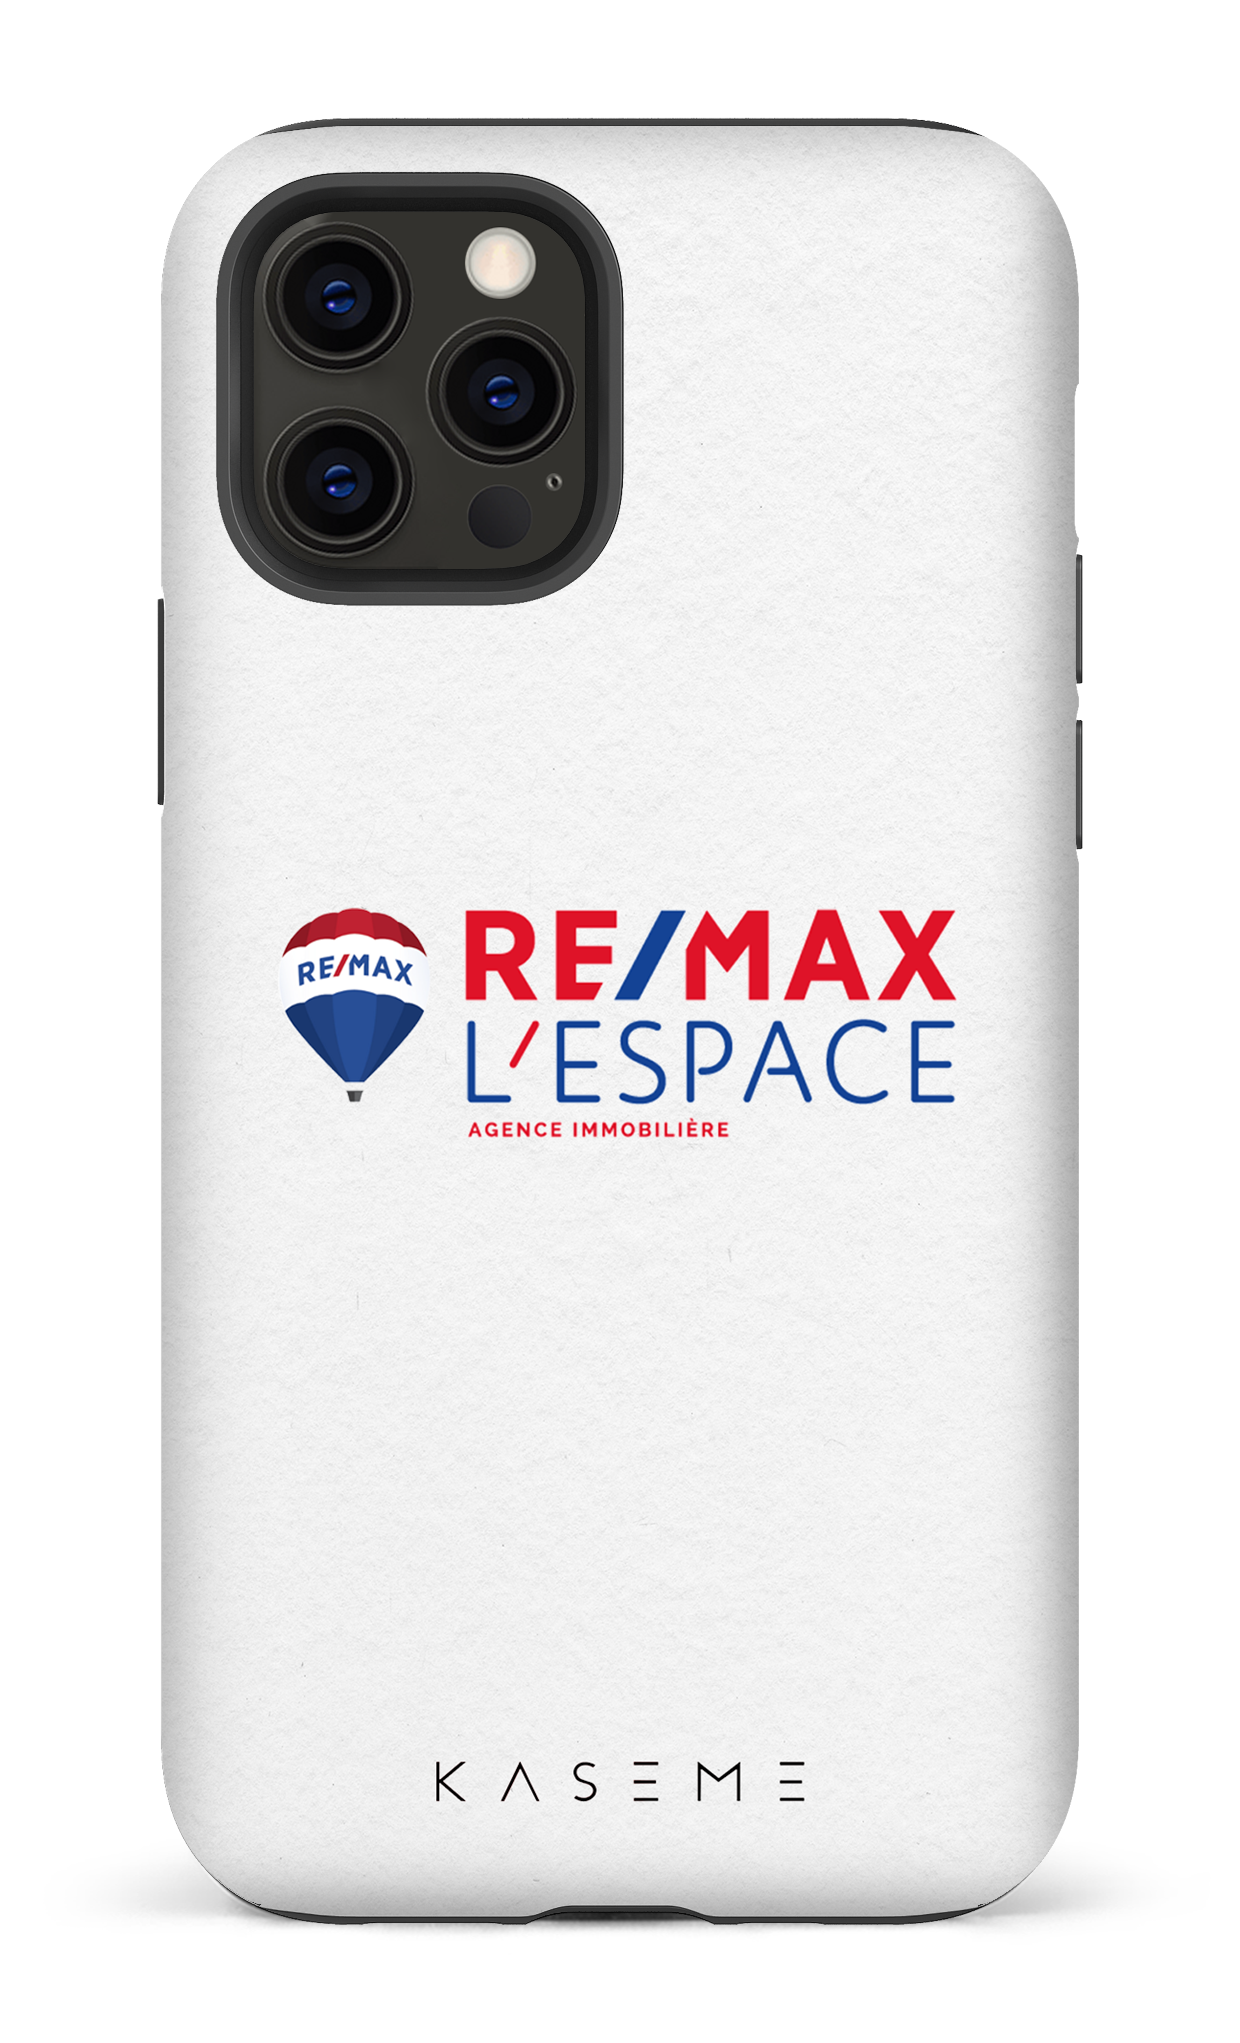 Remax L'Espace Blanc - iPhone 12 Pro